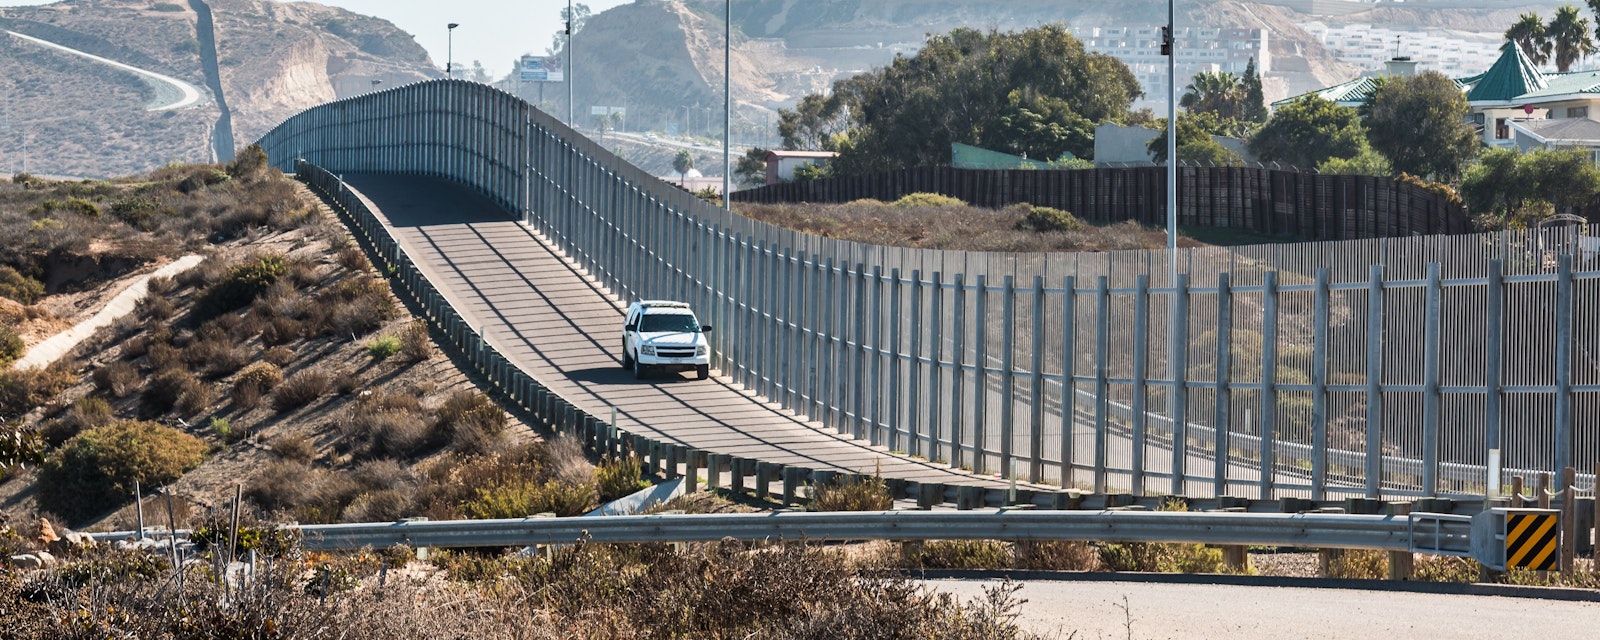 San,Diego,,California,And,Tijuana,,Mexico,International,Border,Wall,With